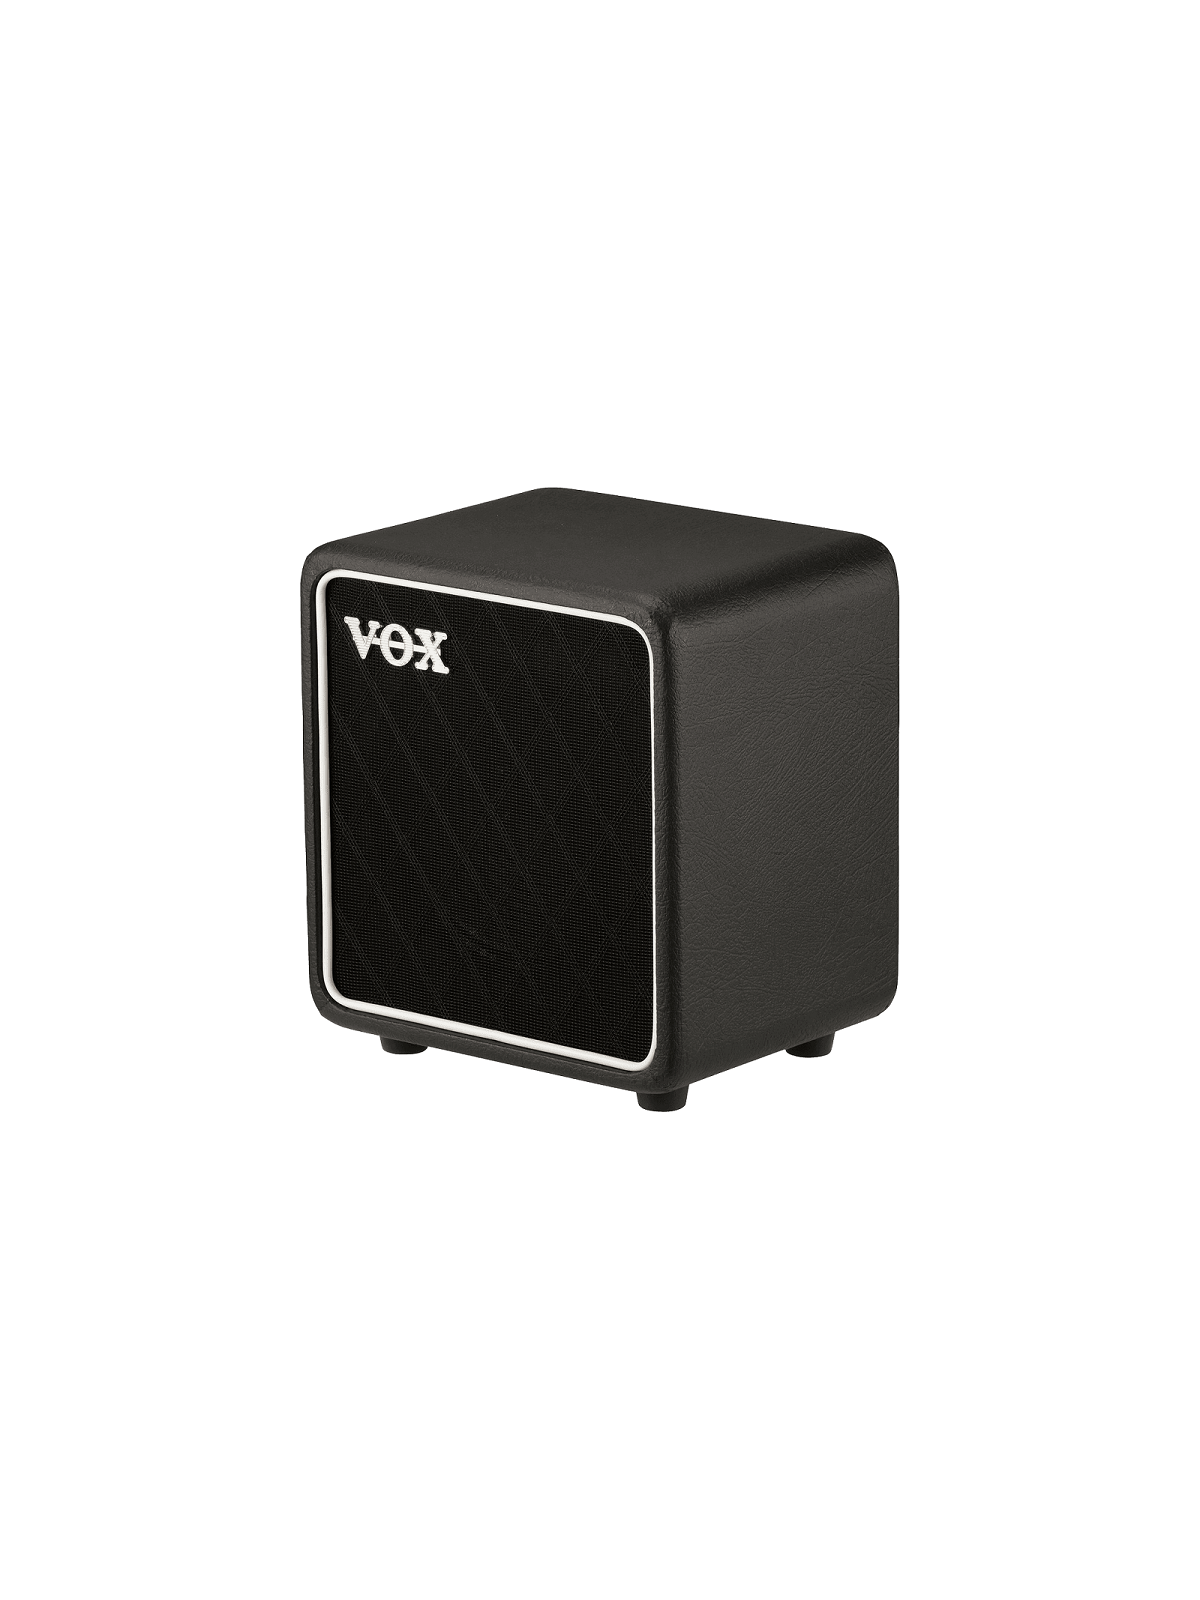 Vox - BC108